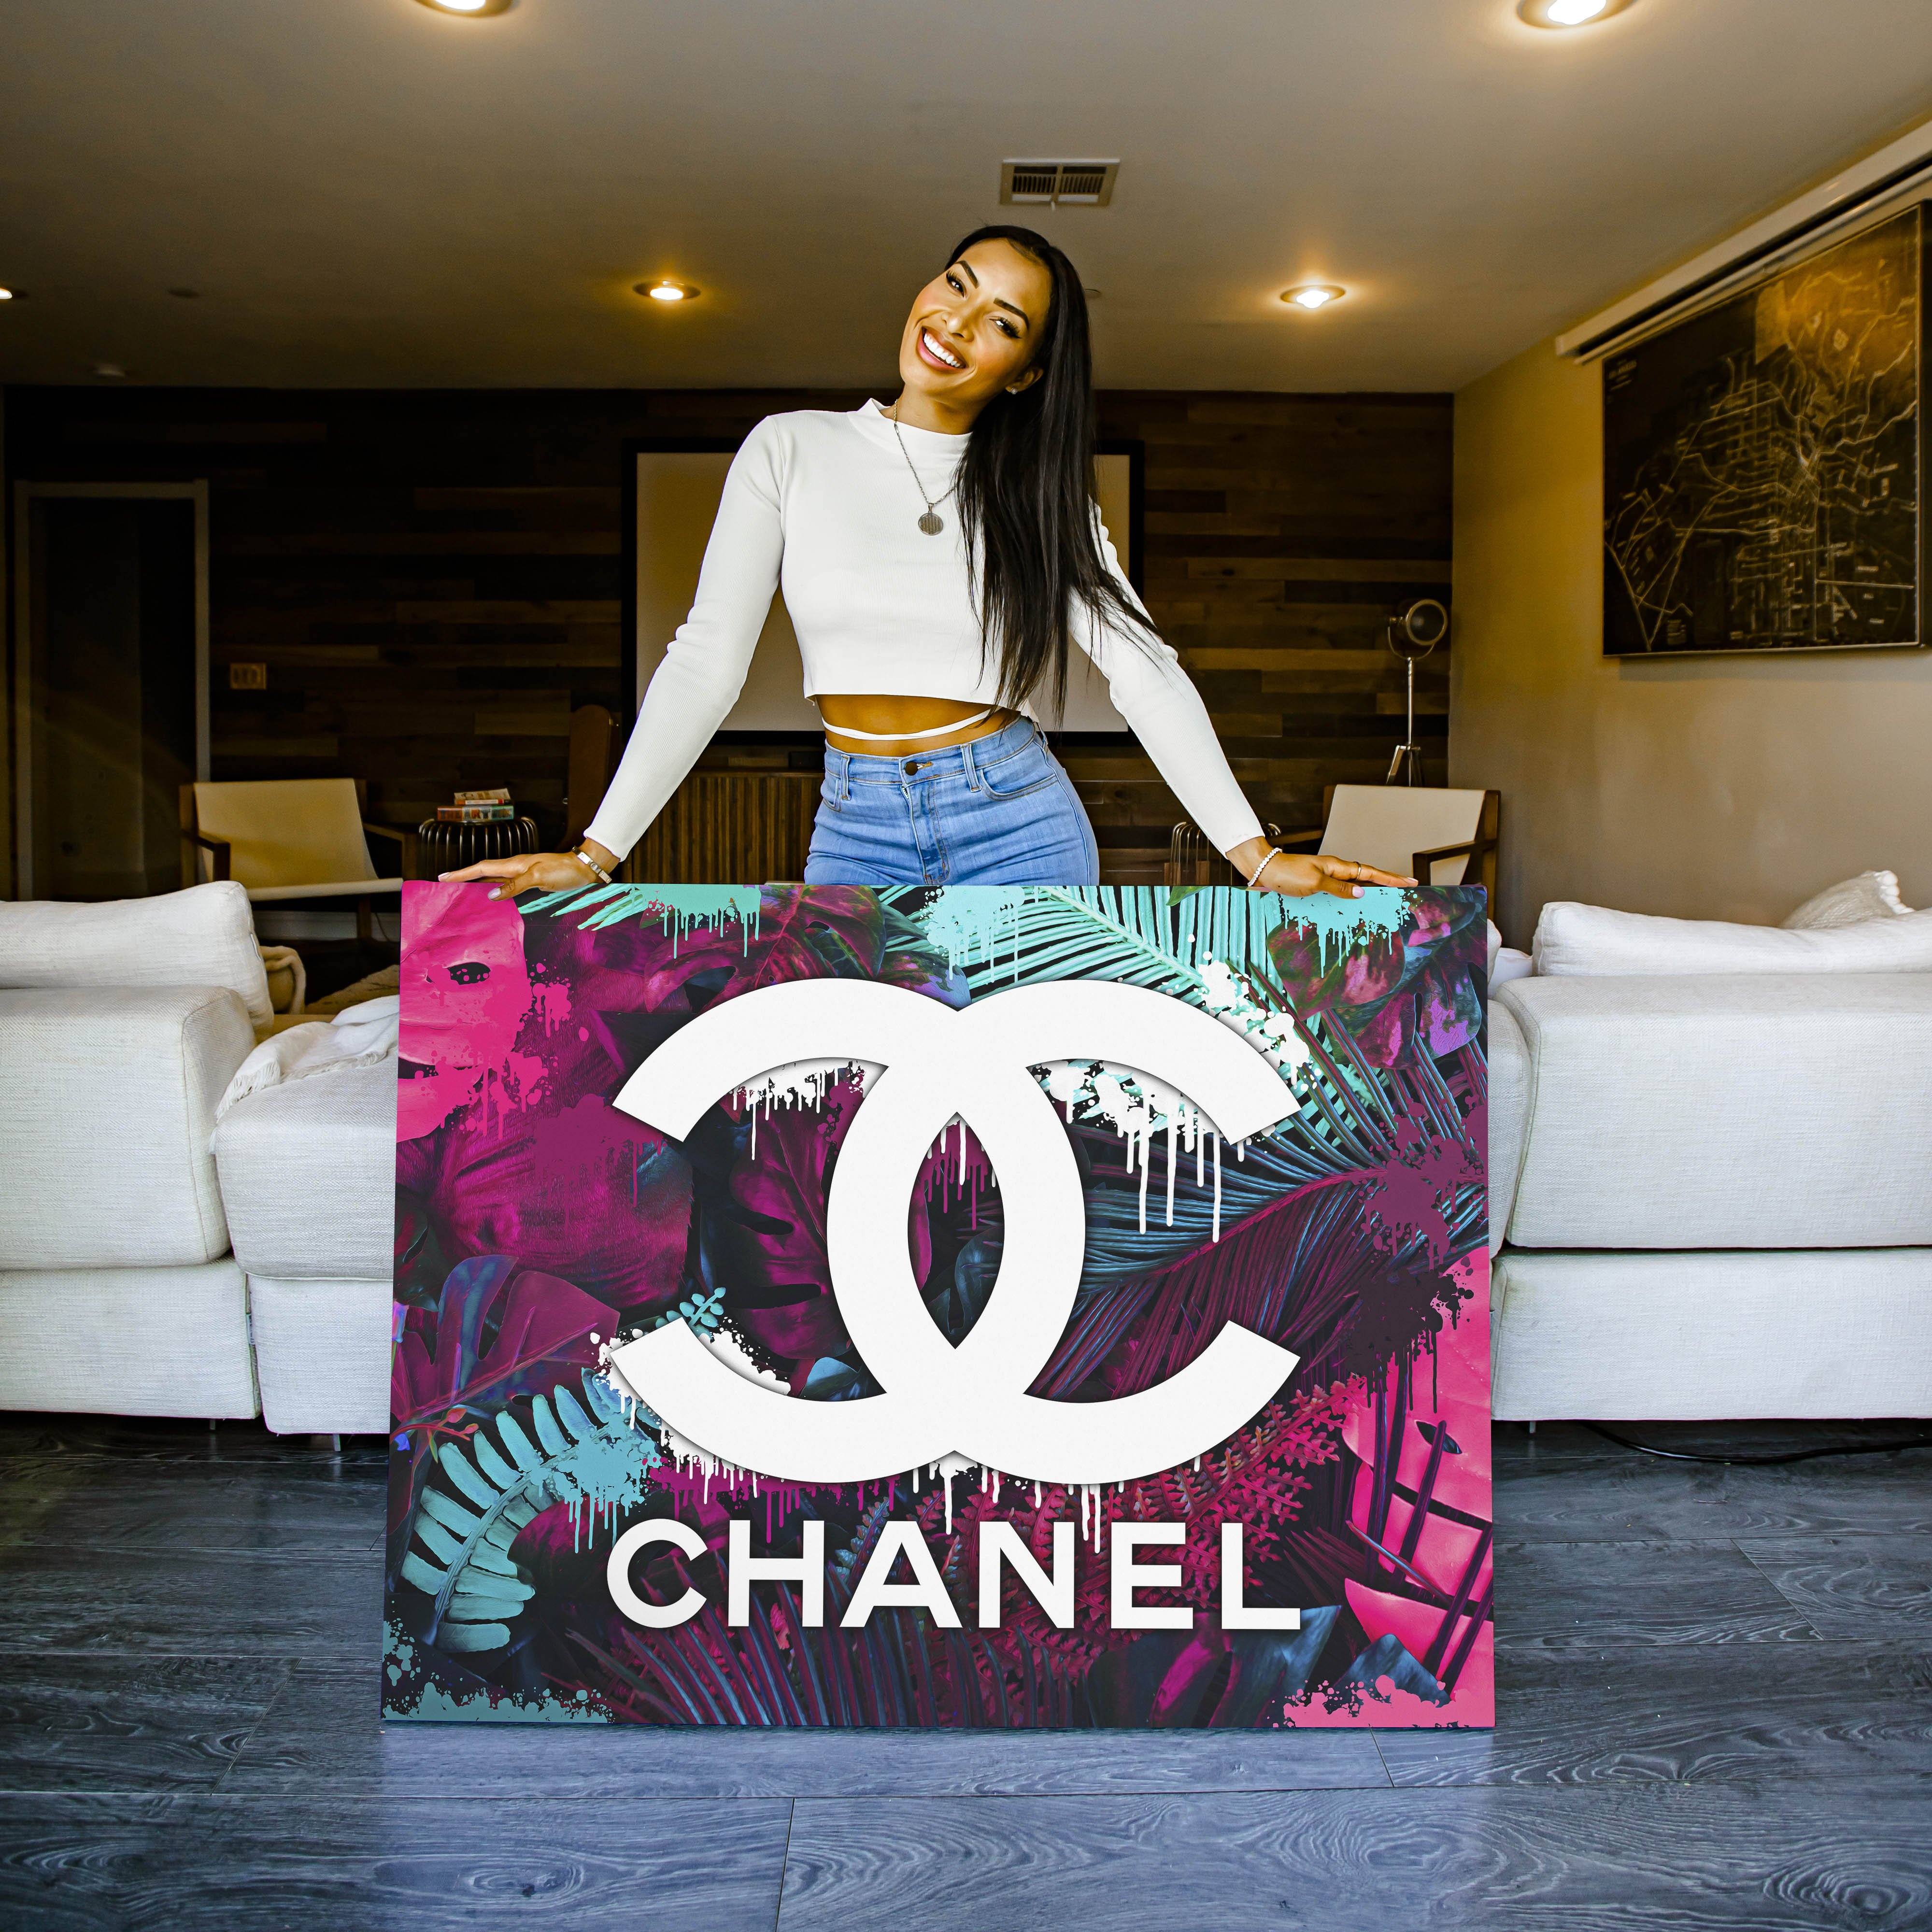 Neon Chanel – Canvas Cultures